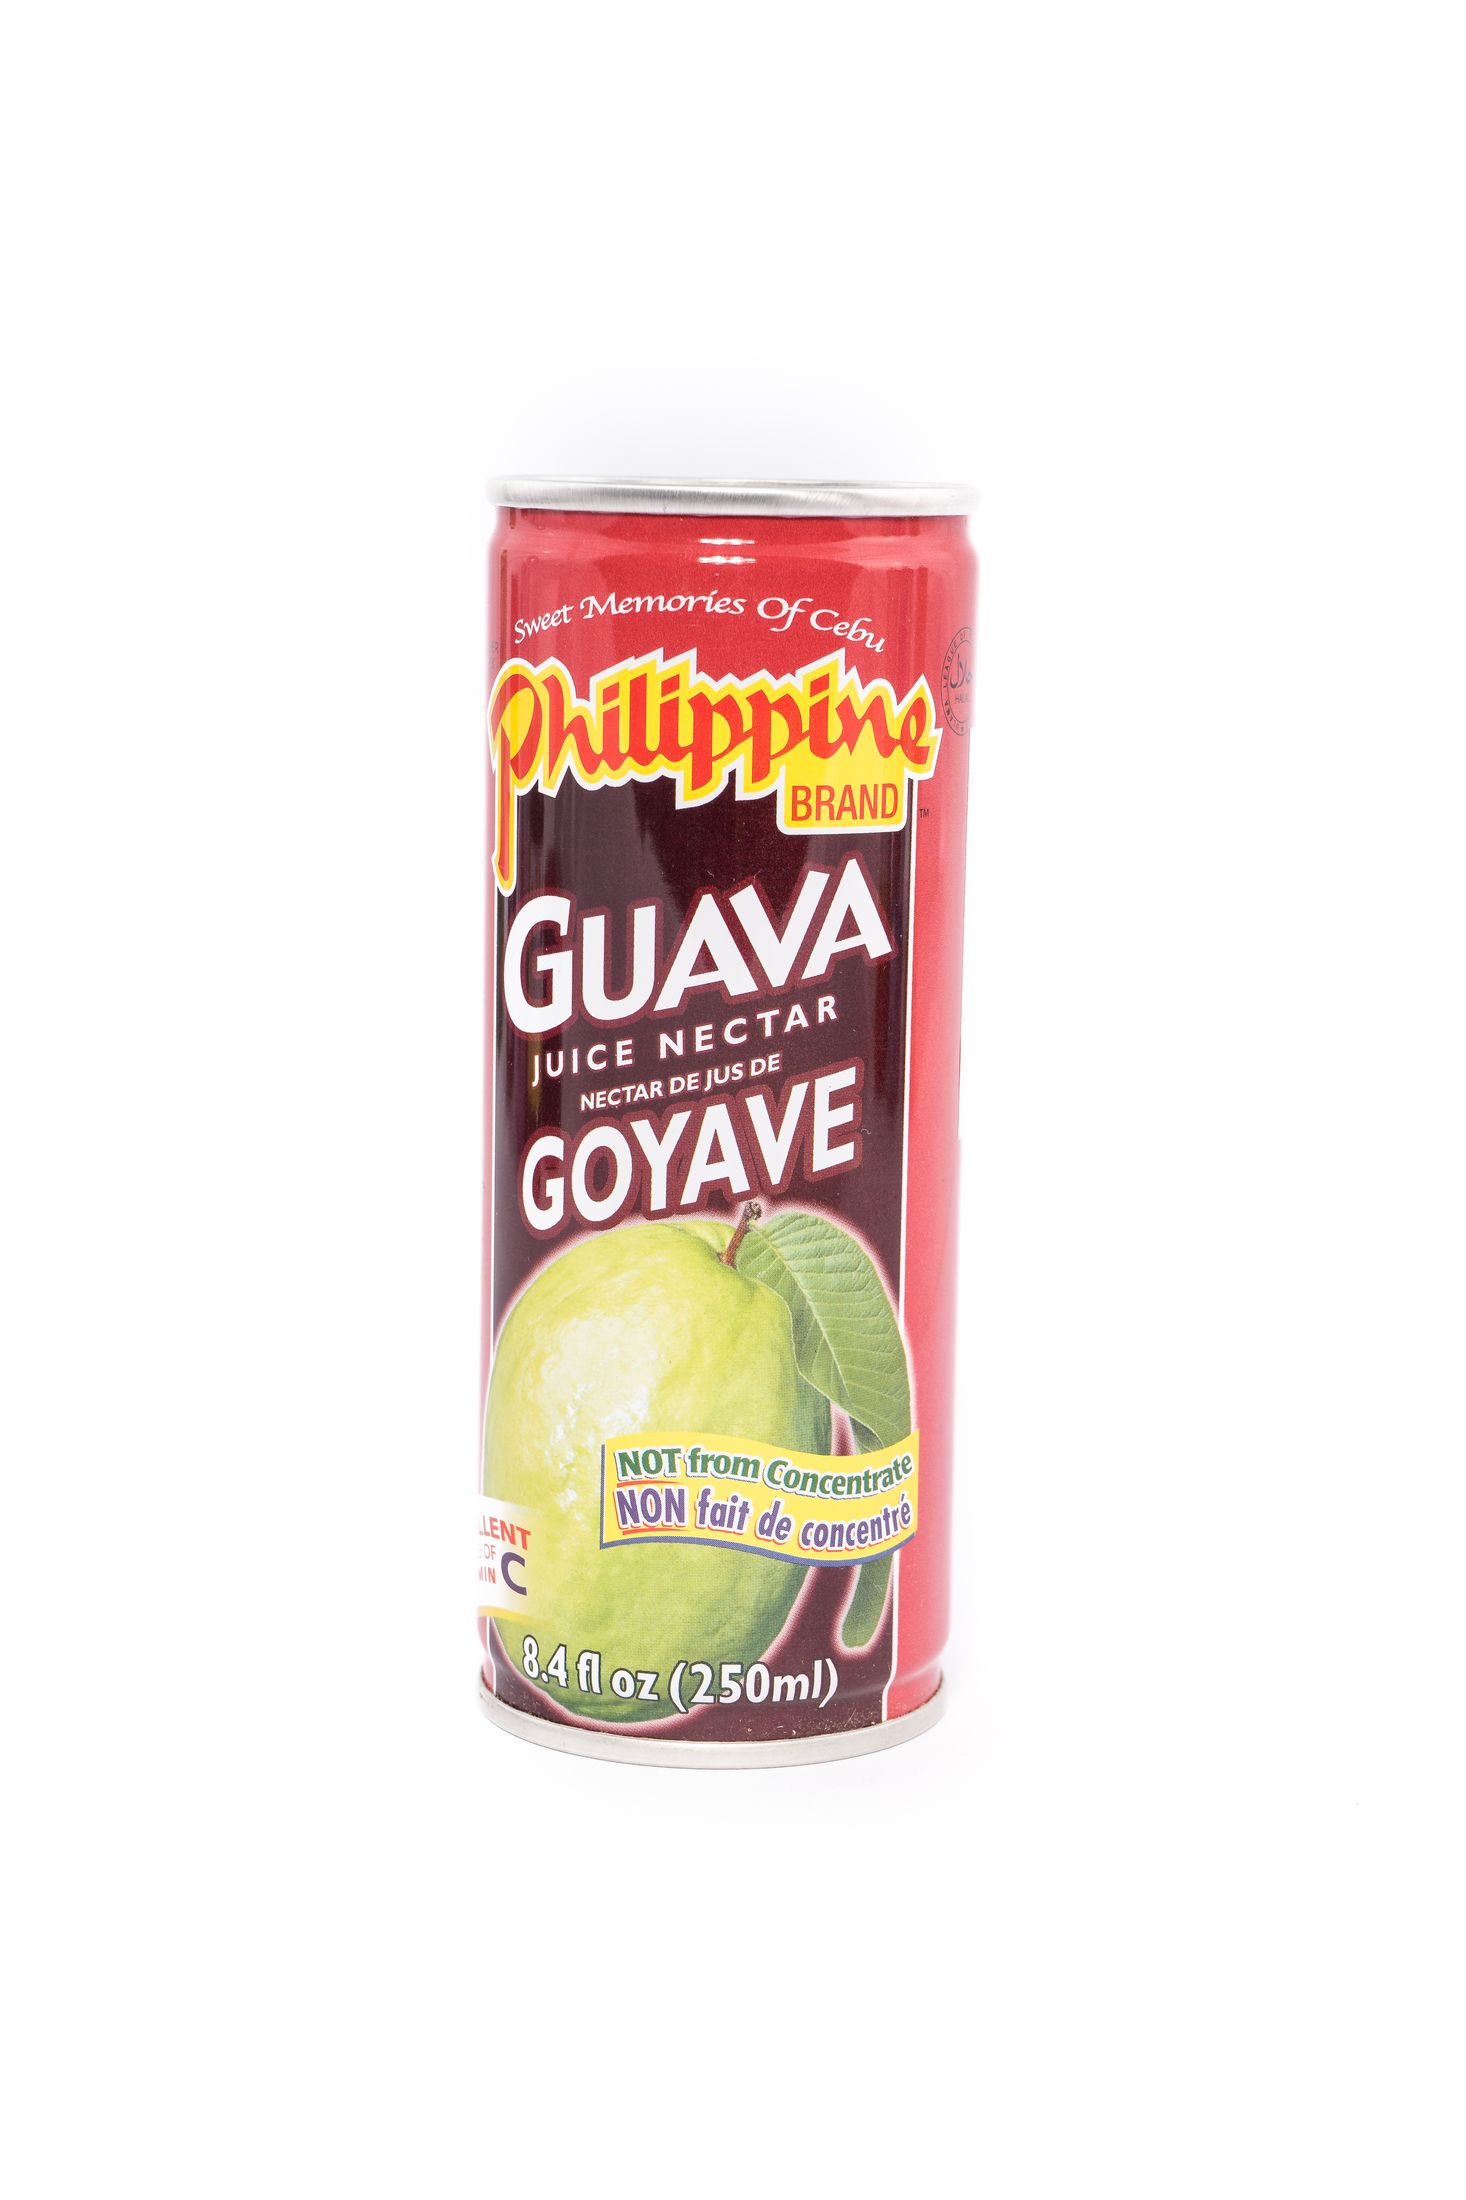 Philippine Brand Guava juice nectar